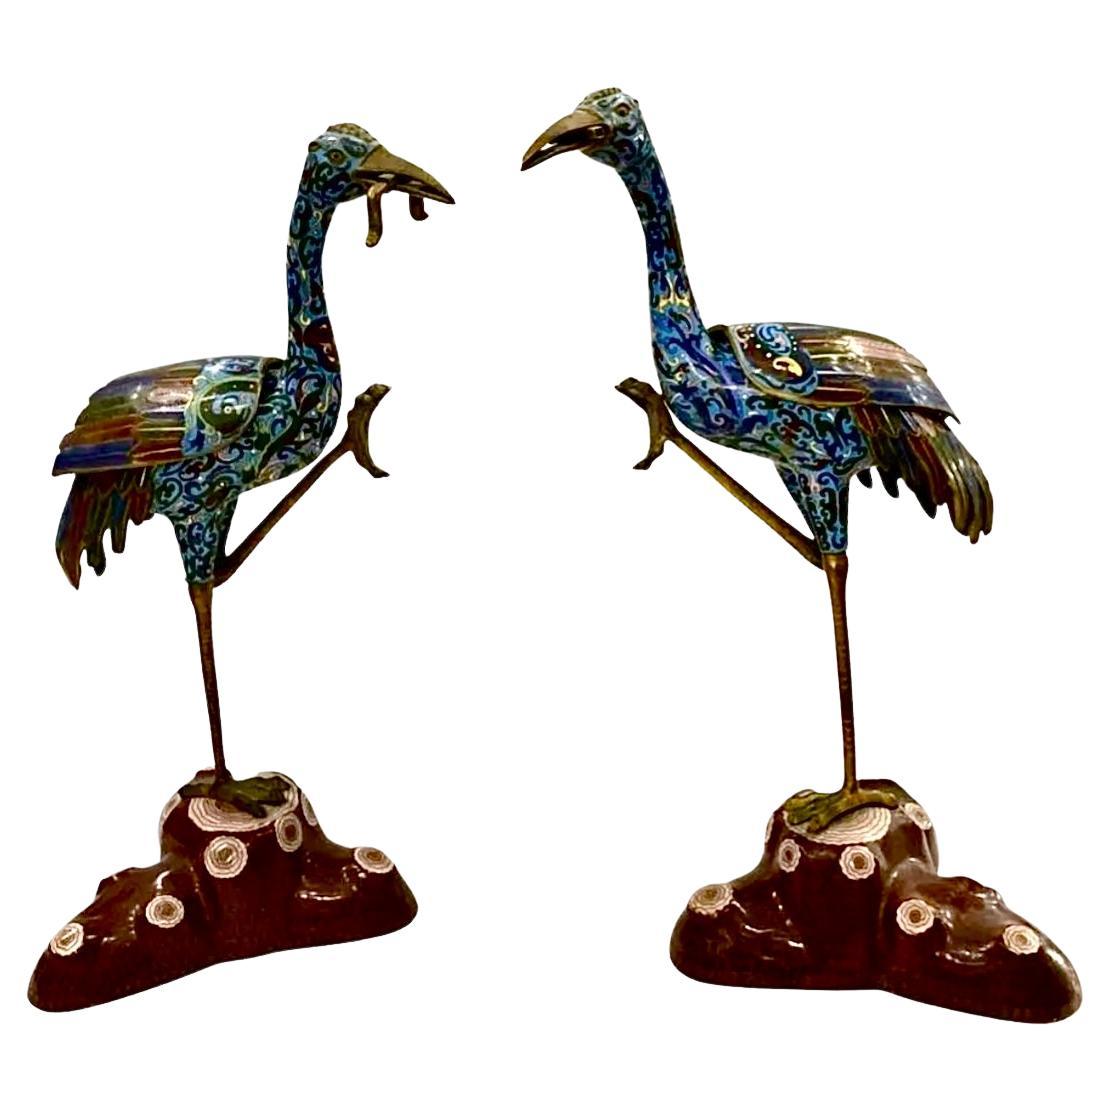 Pair of Chinese Cloisonne Enamel Cranes